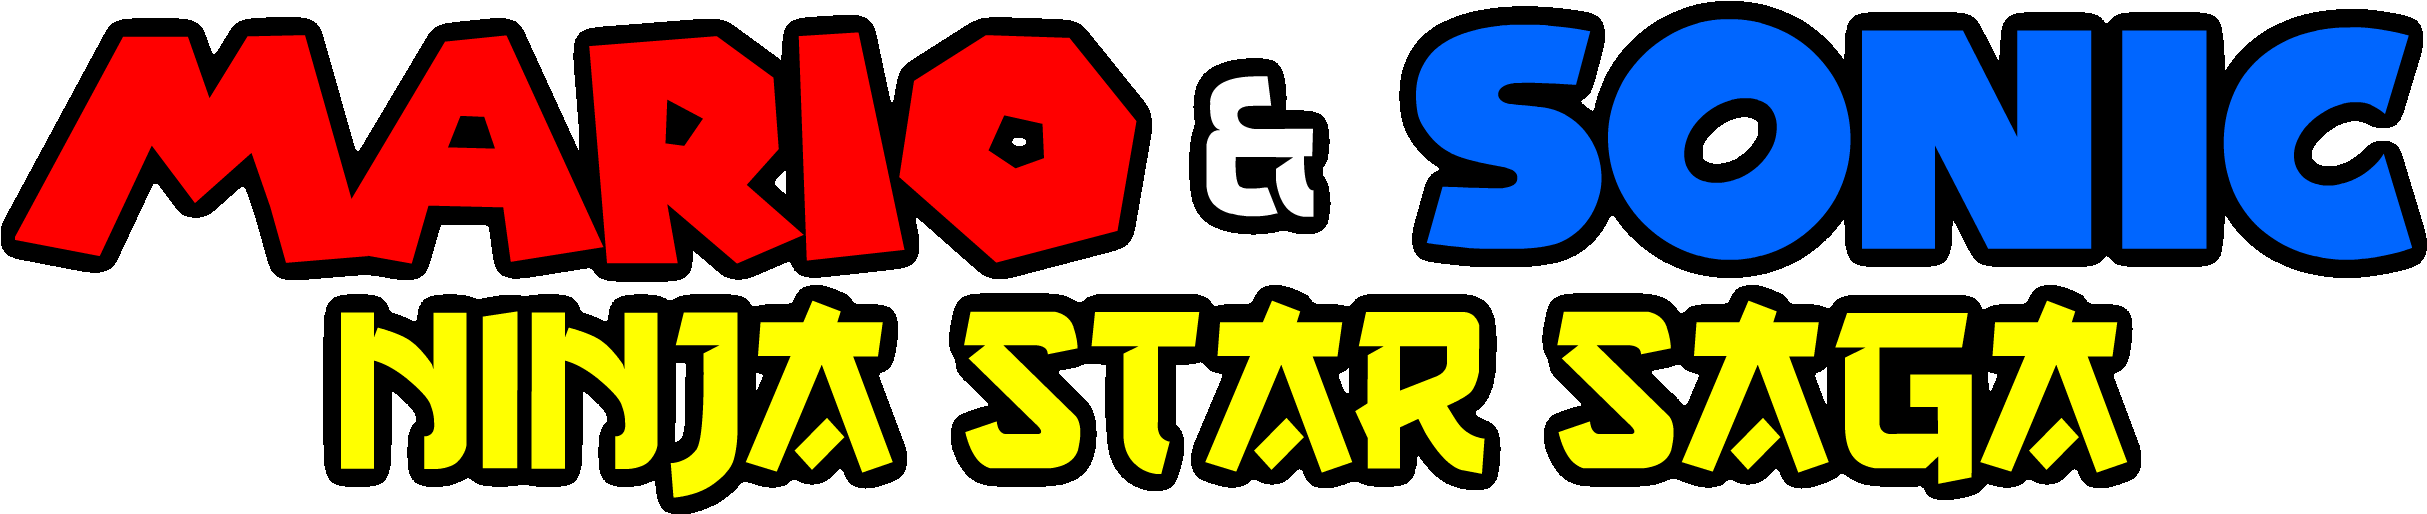 Mario And Sonic Ninja Star Saga Logo By Asylusgoji91 - Mario & Sonic Logo (2495x552)